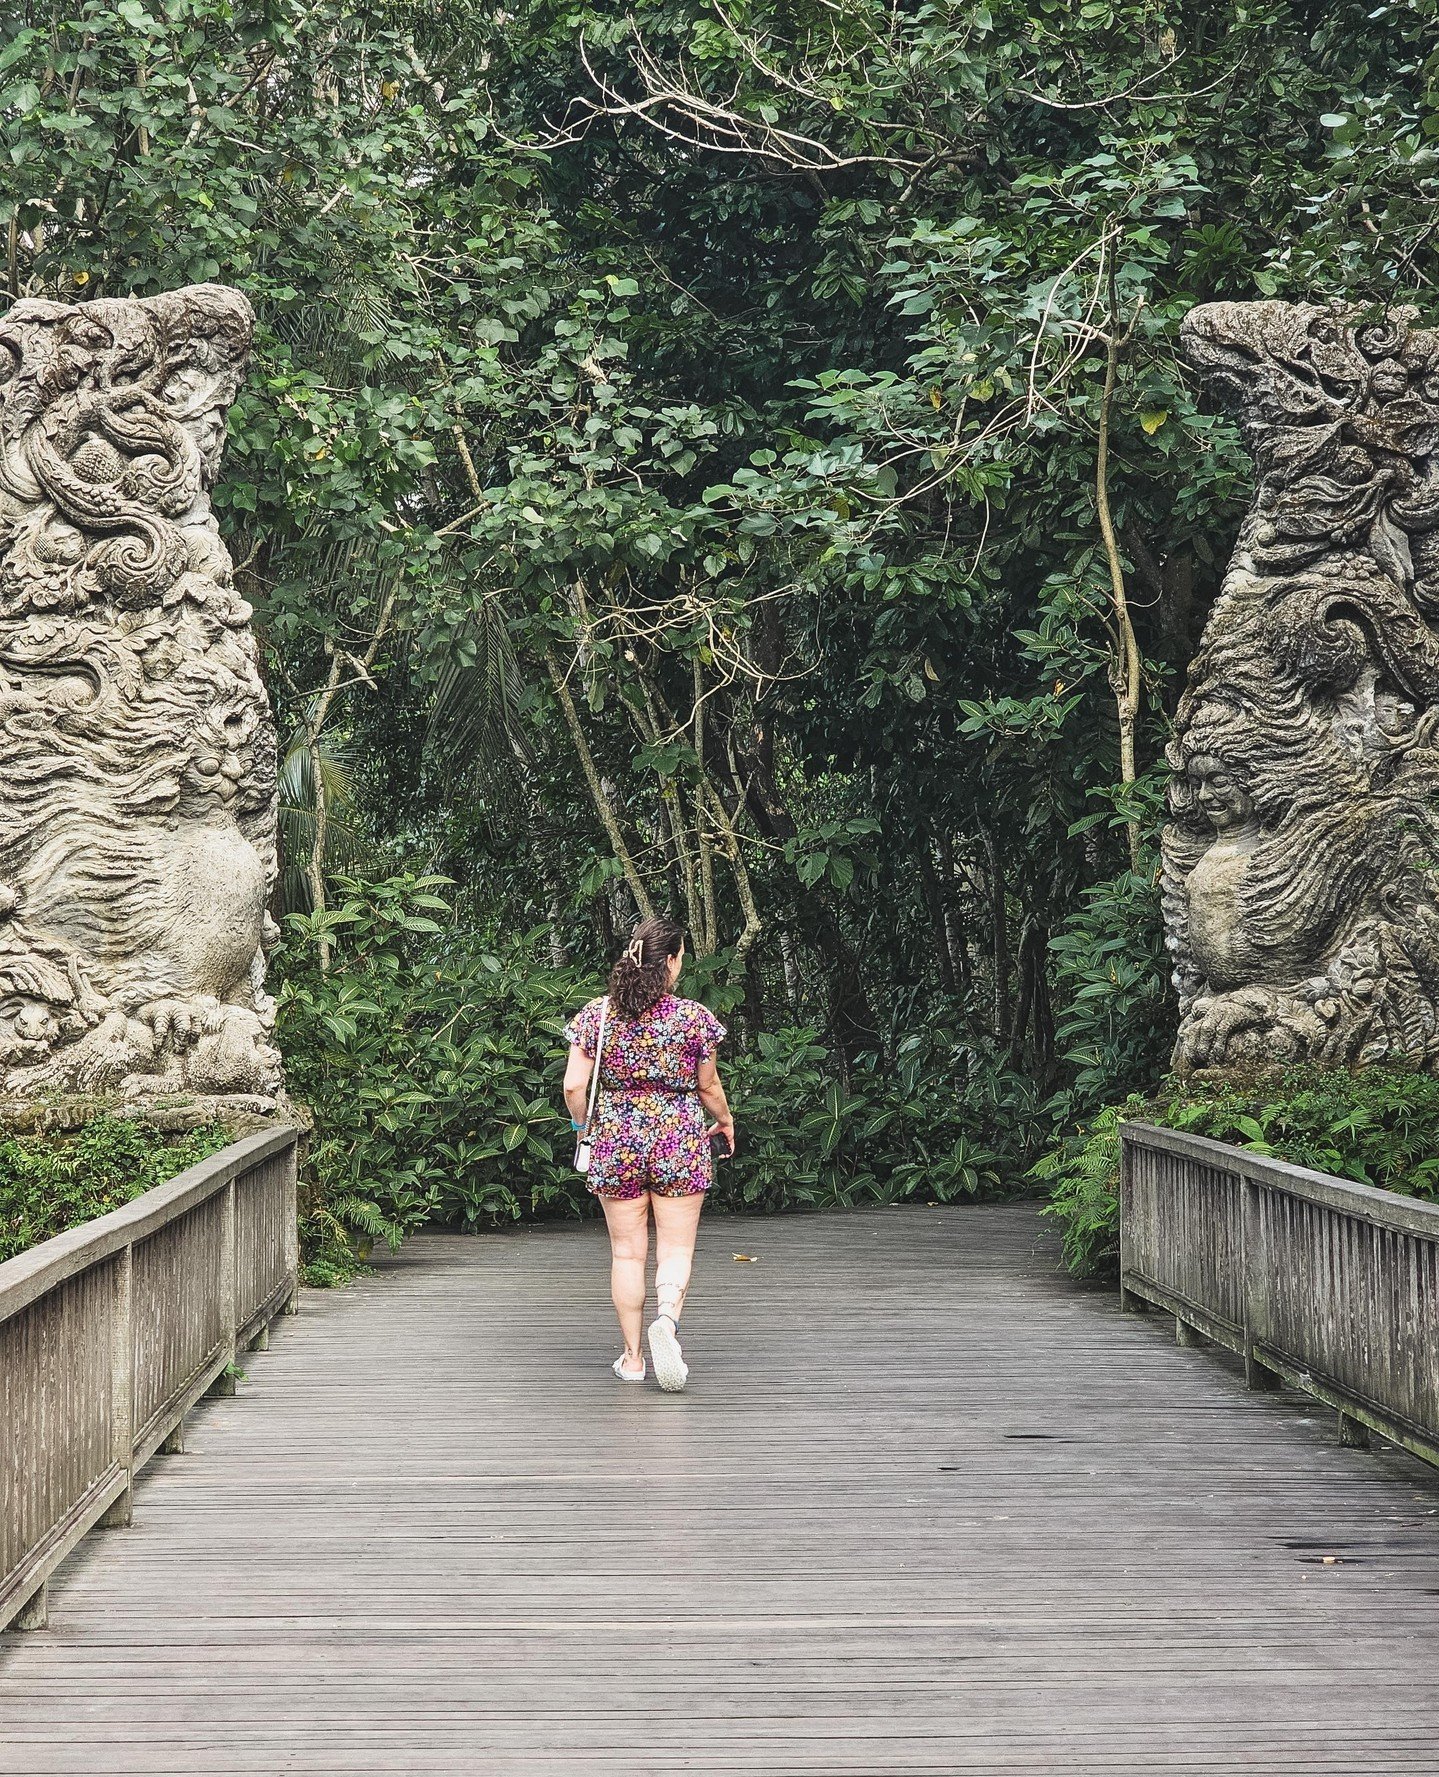 &ldquo;Let your dreams take flight.&rdquo;⁠
⁠
📍  Monkey Forest, Ubud, Bali, Indonesia